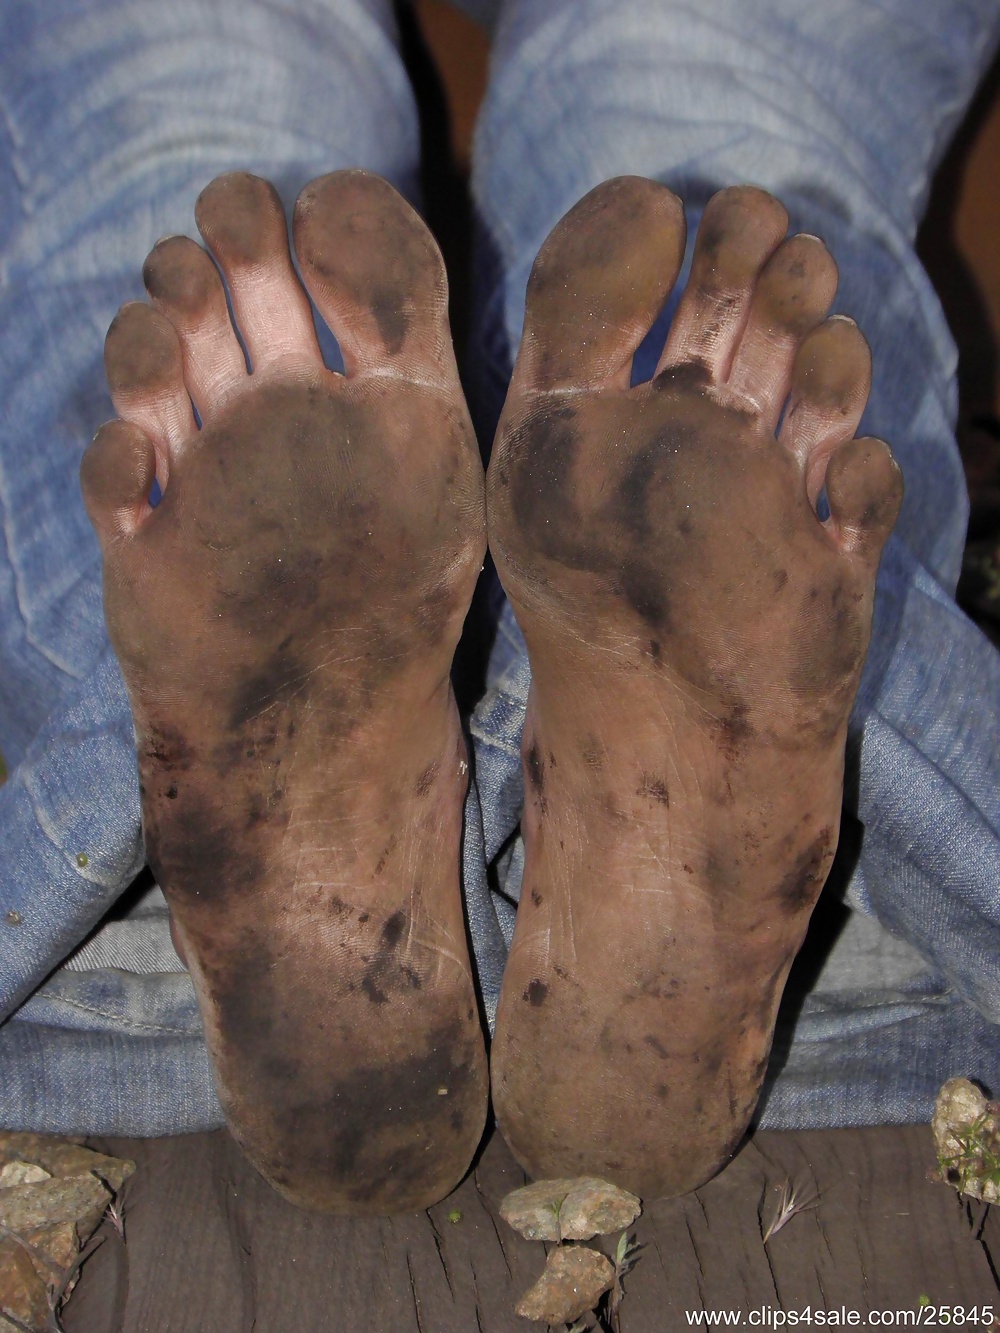 Railway dirty feet pict gal